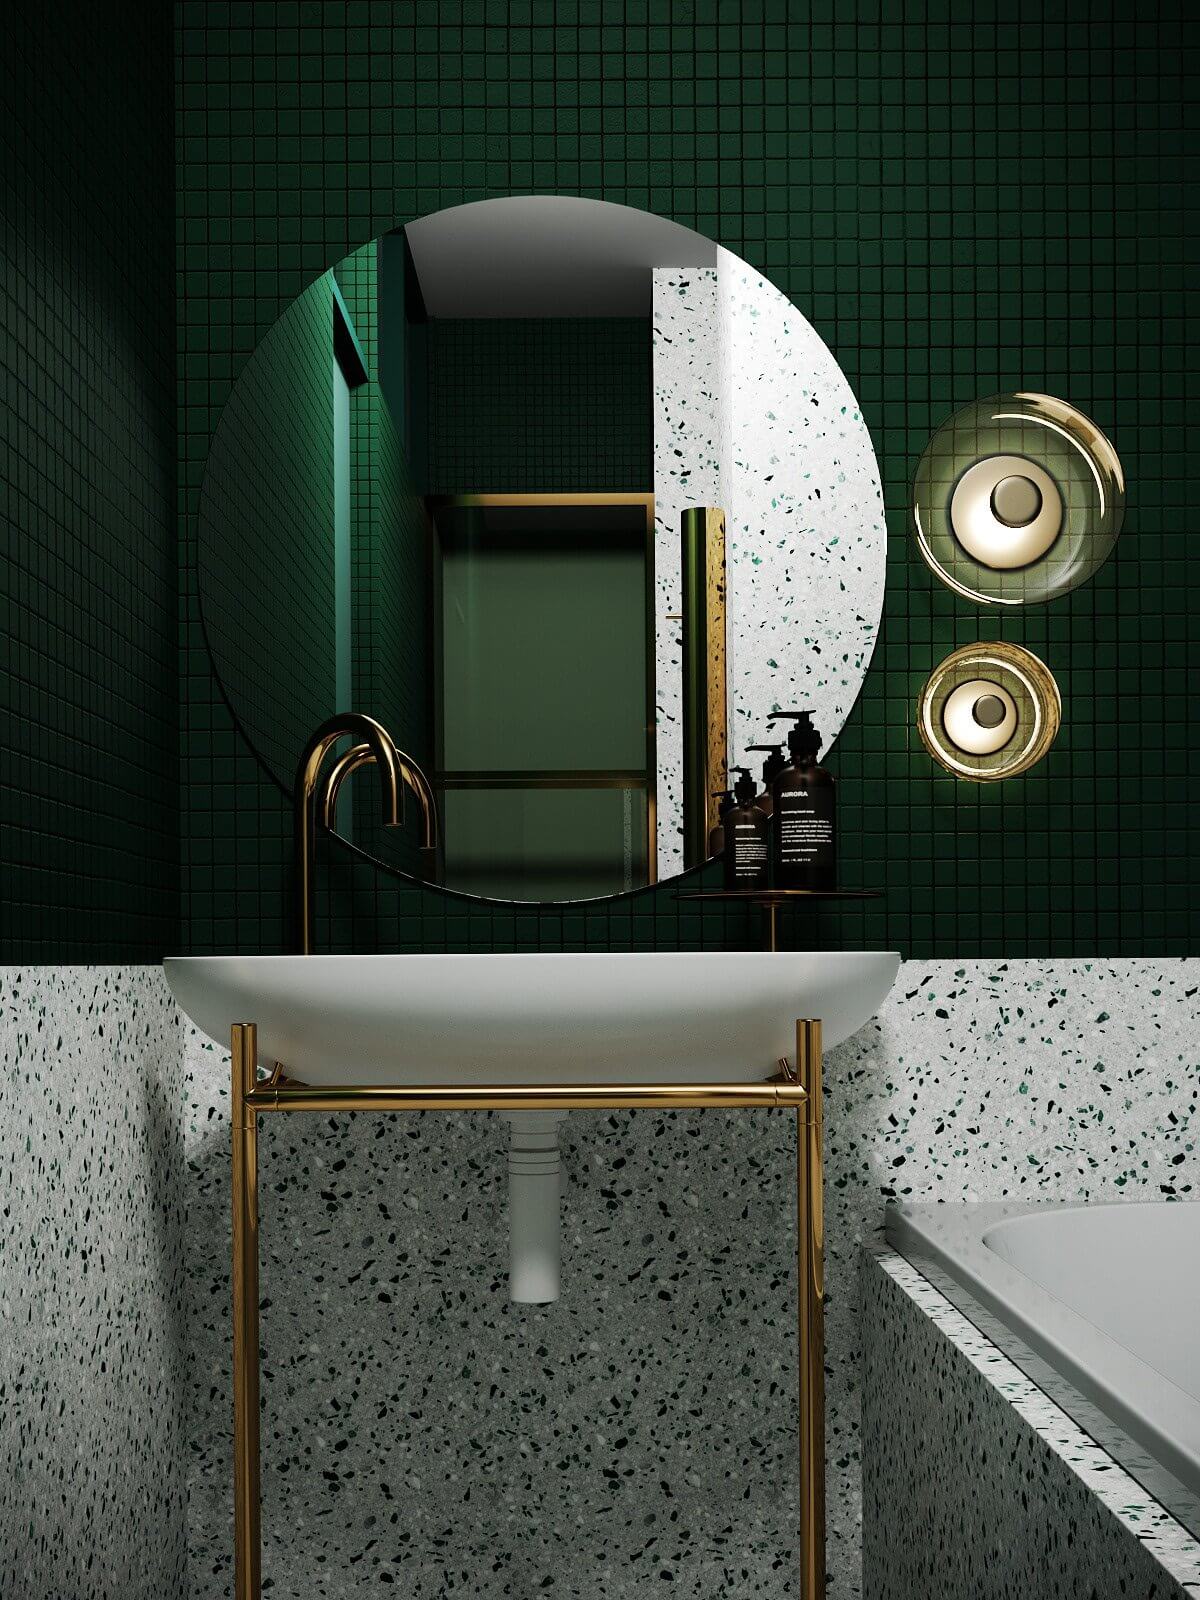 New York concept house bathroom wall mirror - cgi visualization